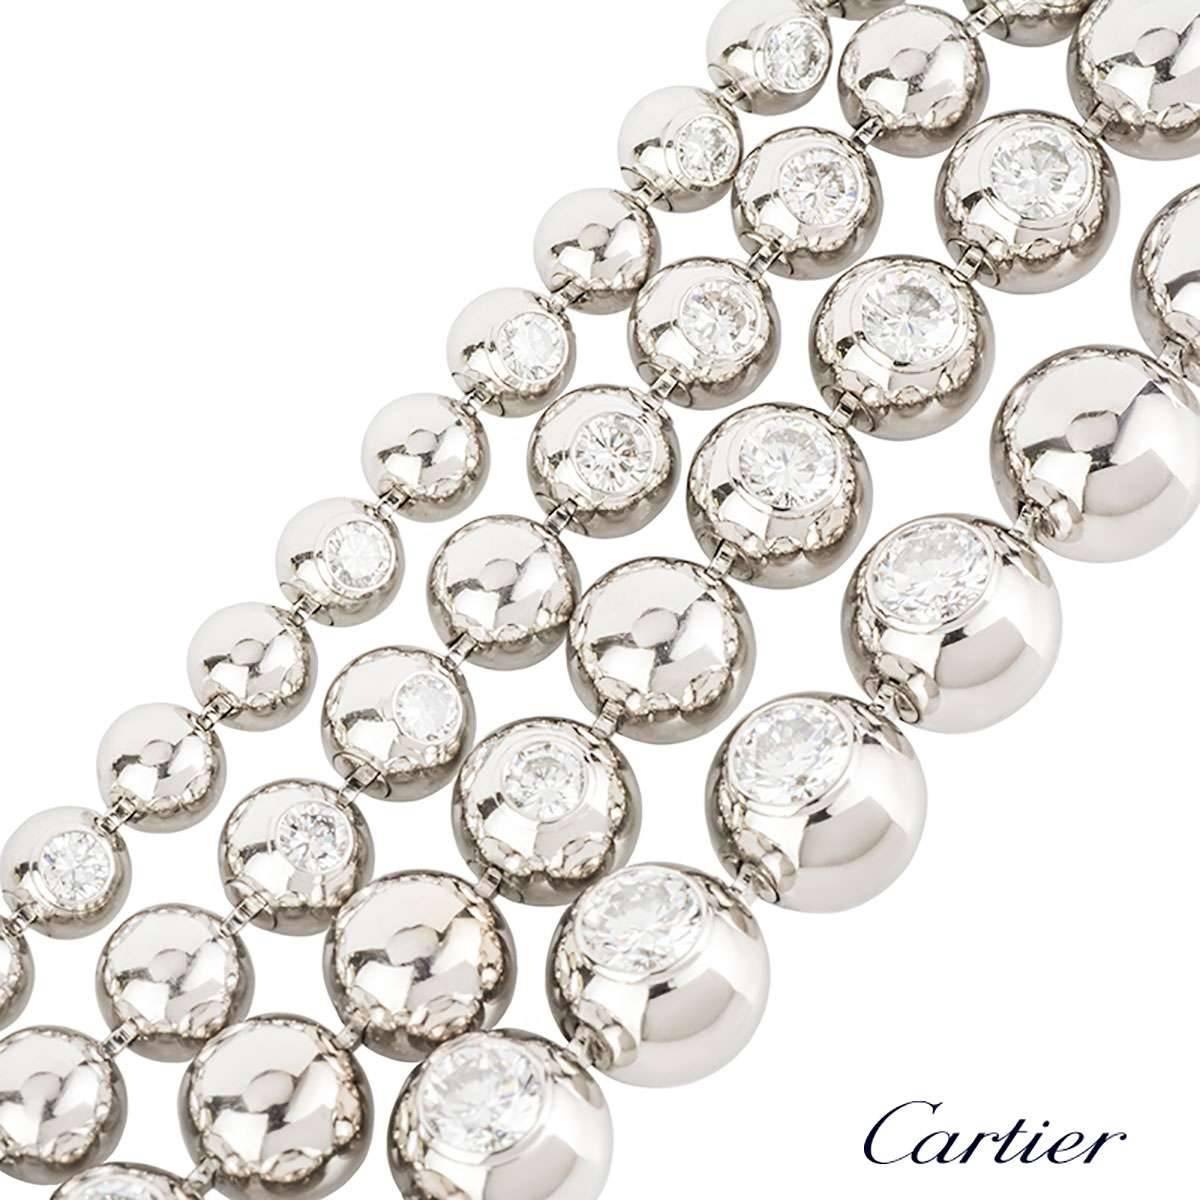 Cartier Moonlight White Gold Diamond Jewelry Suite 2